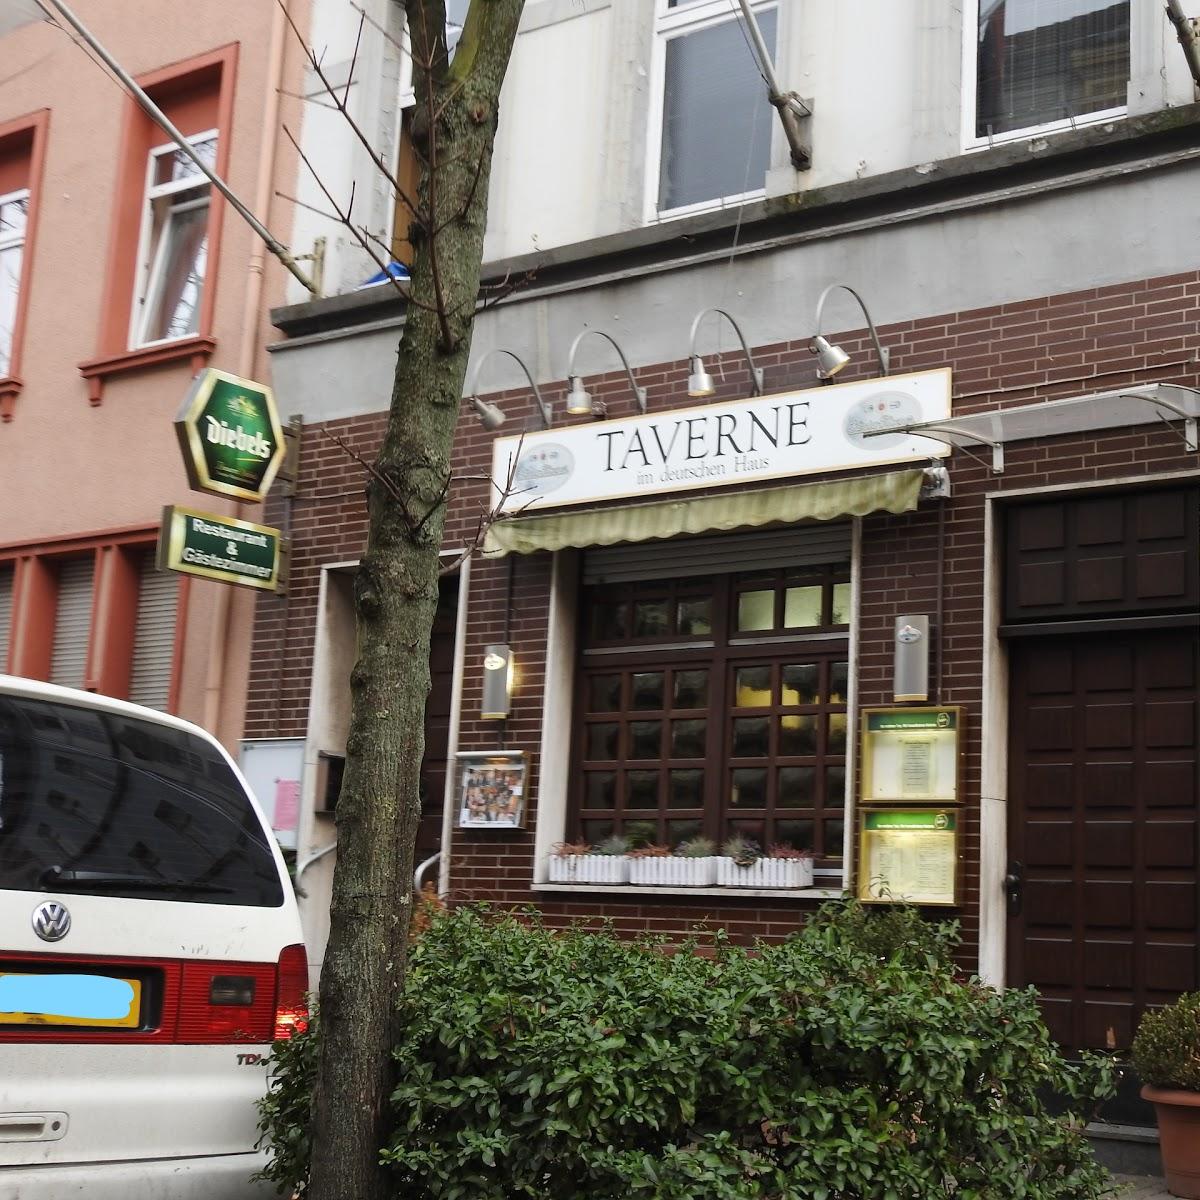 Restaurant "Taverne" in Duisburg